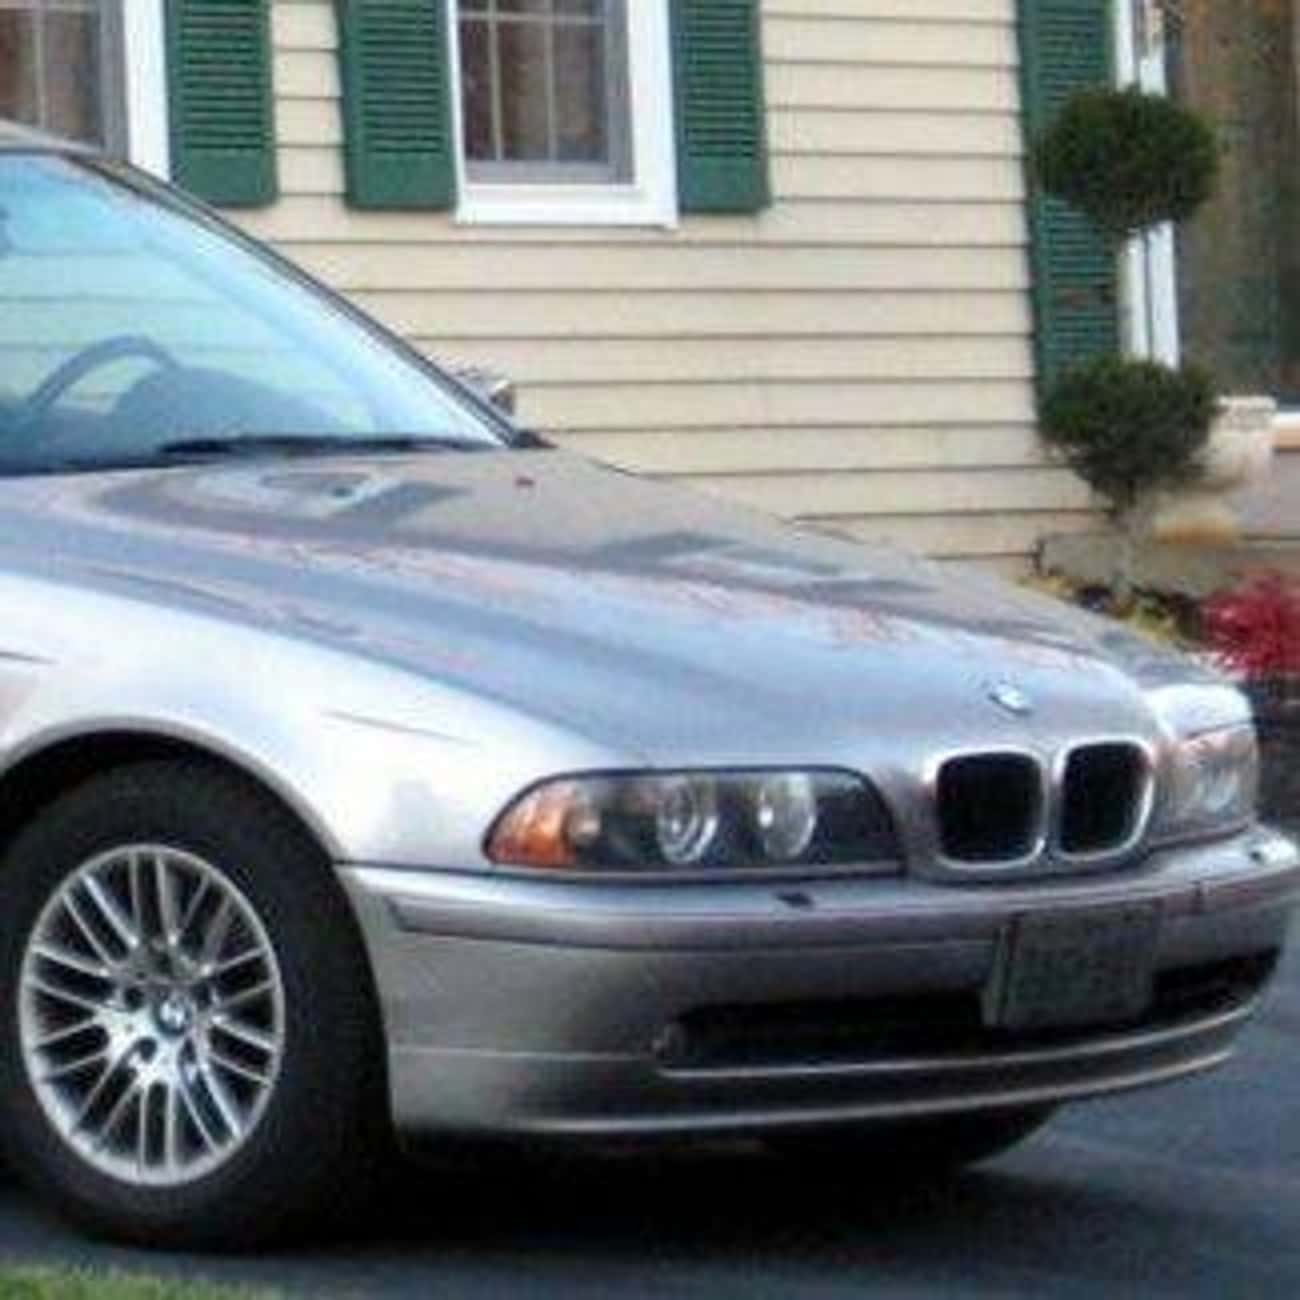 2000 BMW 5-Series